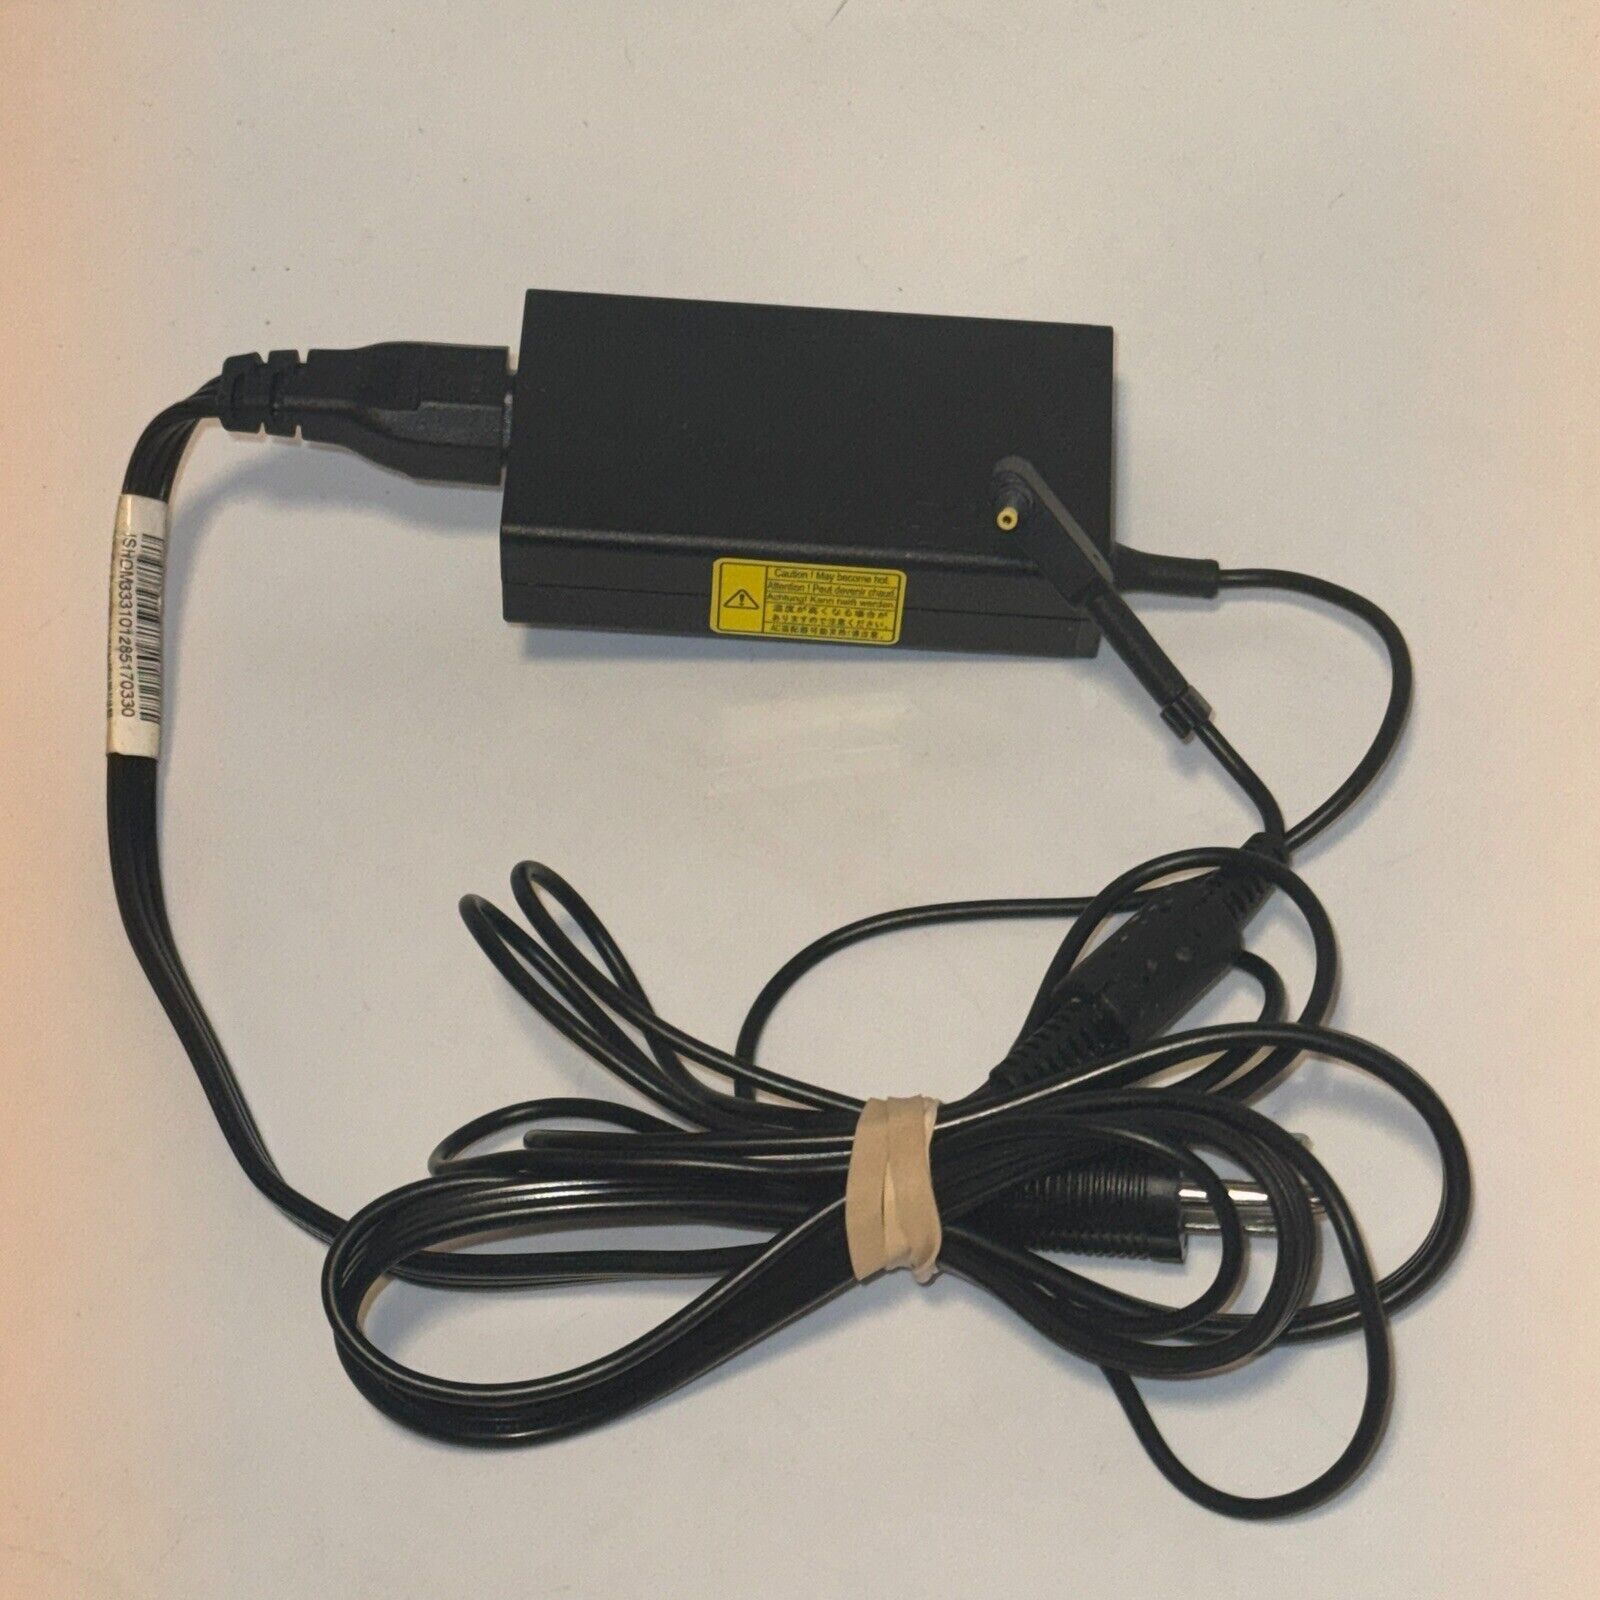 ACER A11-065N1A 19V 3.42A 65W Genuine Original AC Power Adapter Charger